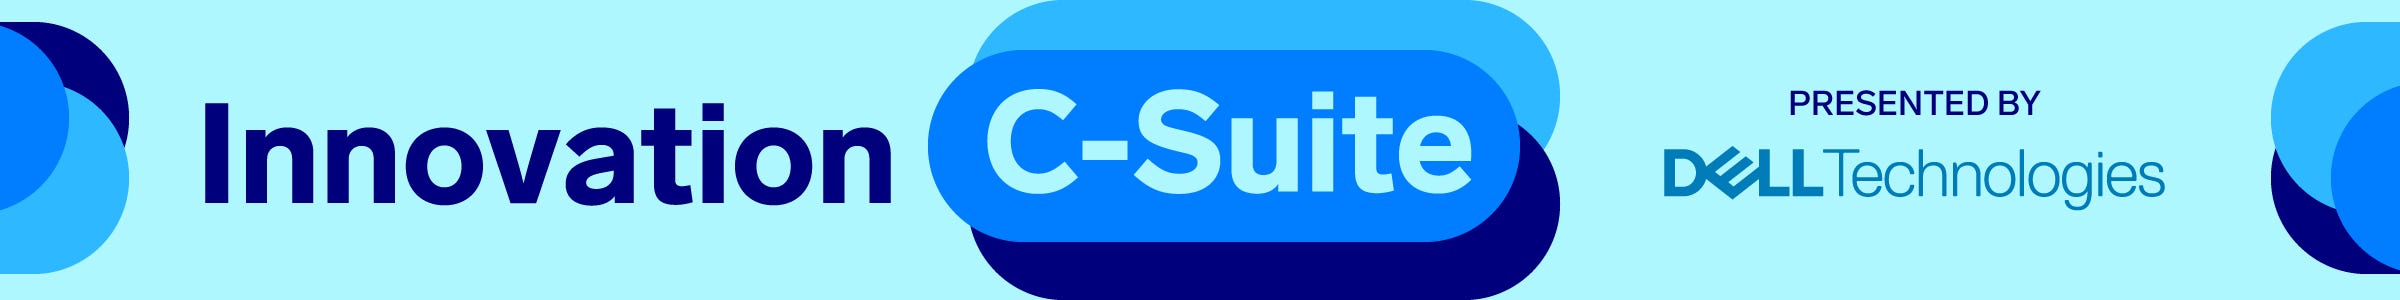 Innovation C-Suite Banner: Dell Technologies Sponsor